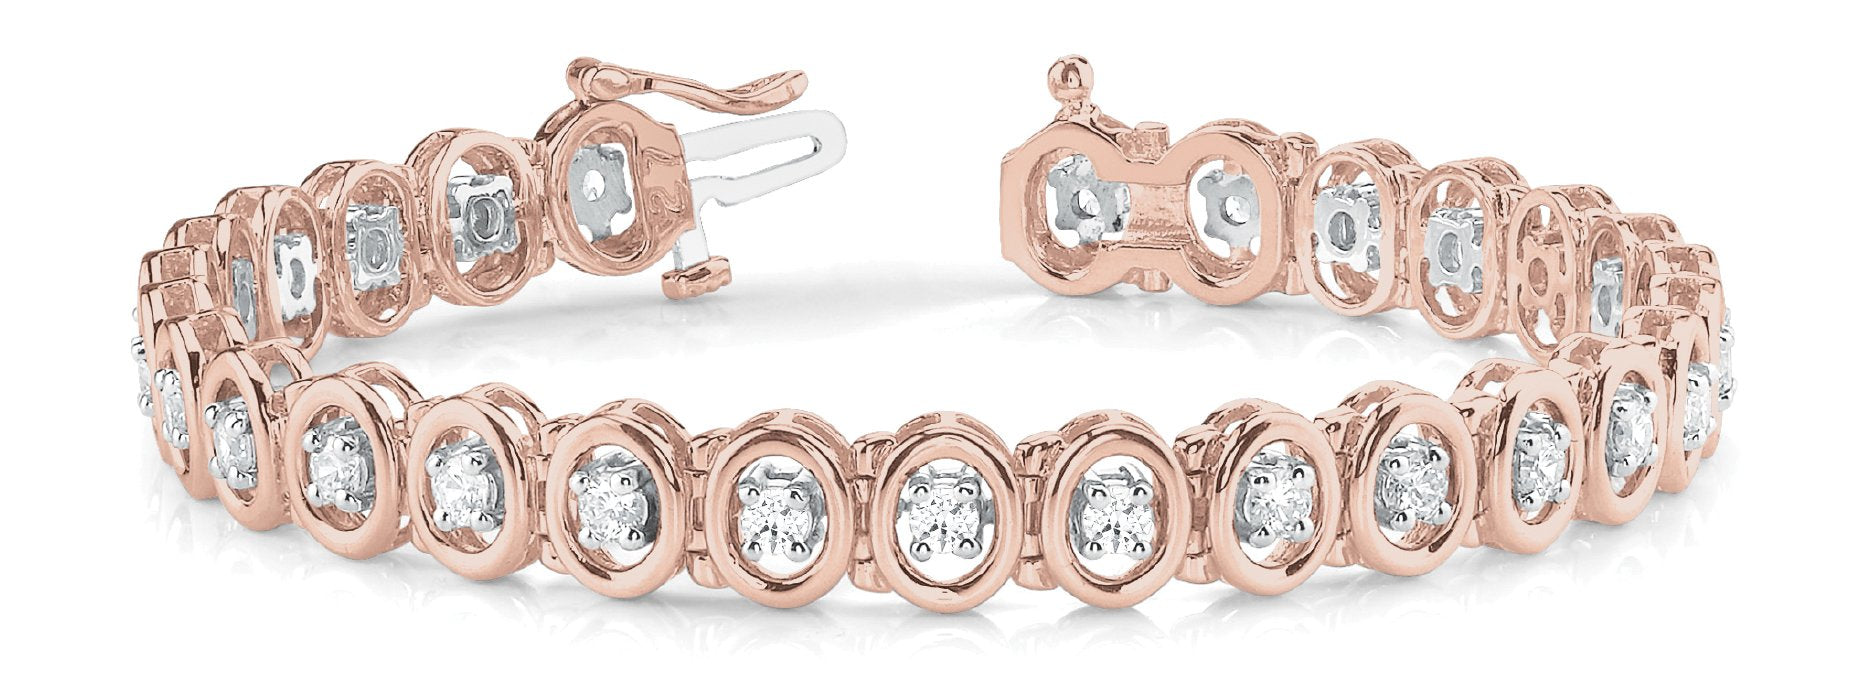 Fancy Diamond Bracelet Ladies 3.04ct tw - 14kt Rose Gold